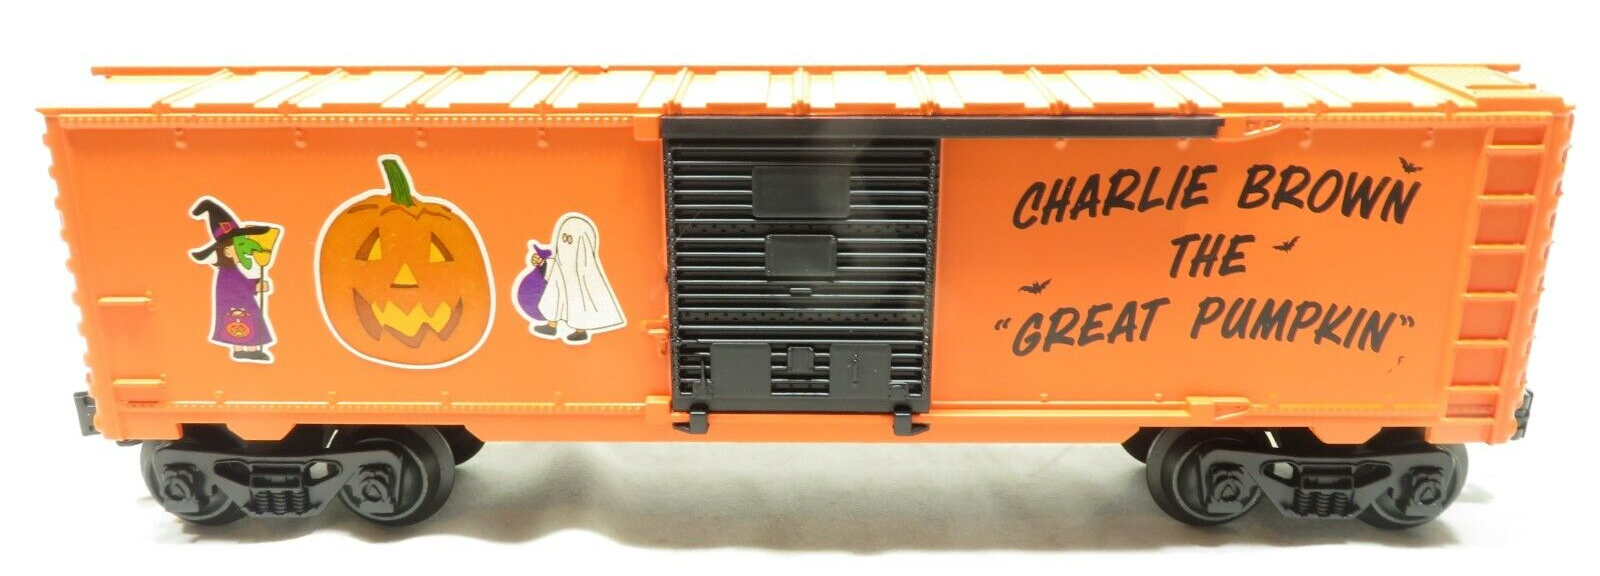 RGS 103100 Charlie Brown the Great Pumpkin Limited Boxcar NIB